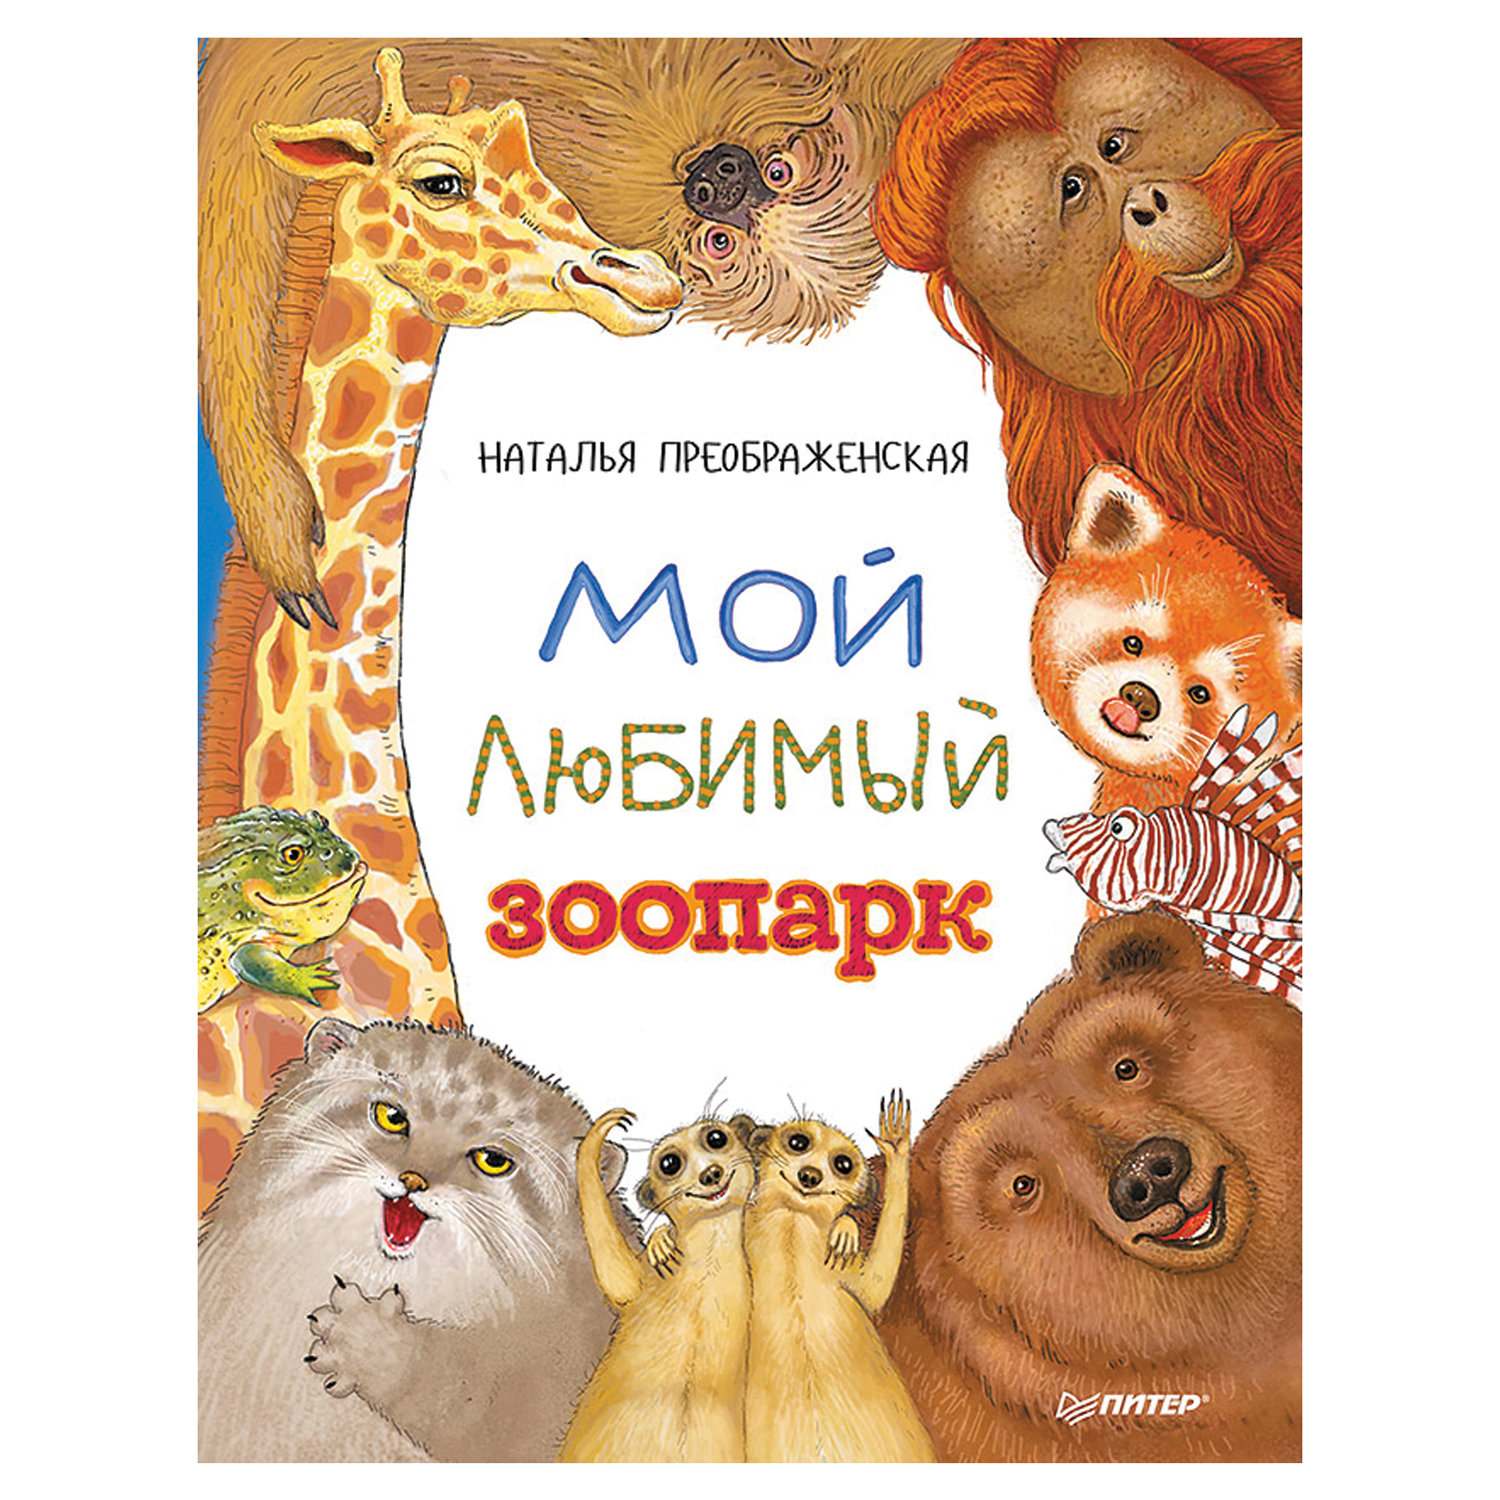 Интернет Магазин Зоопарк Москва